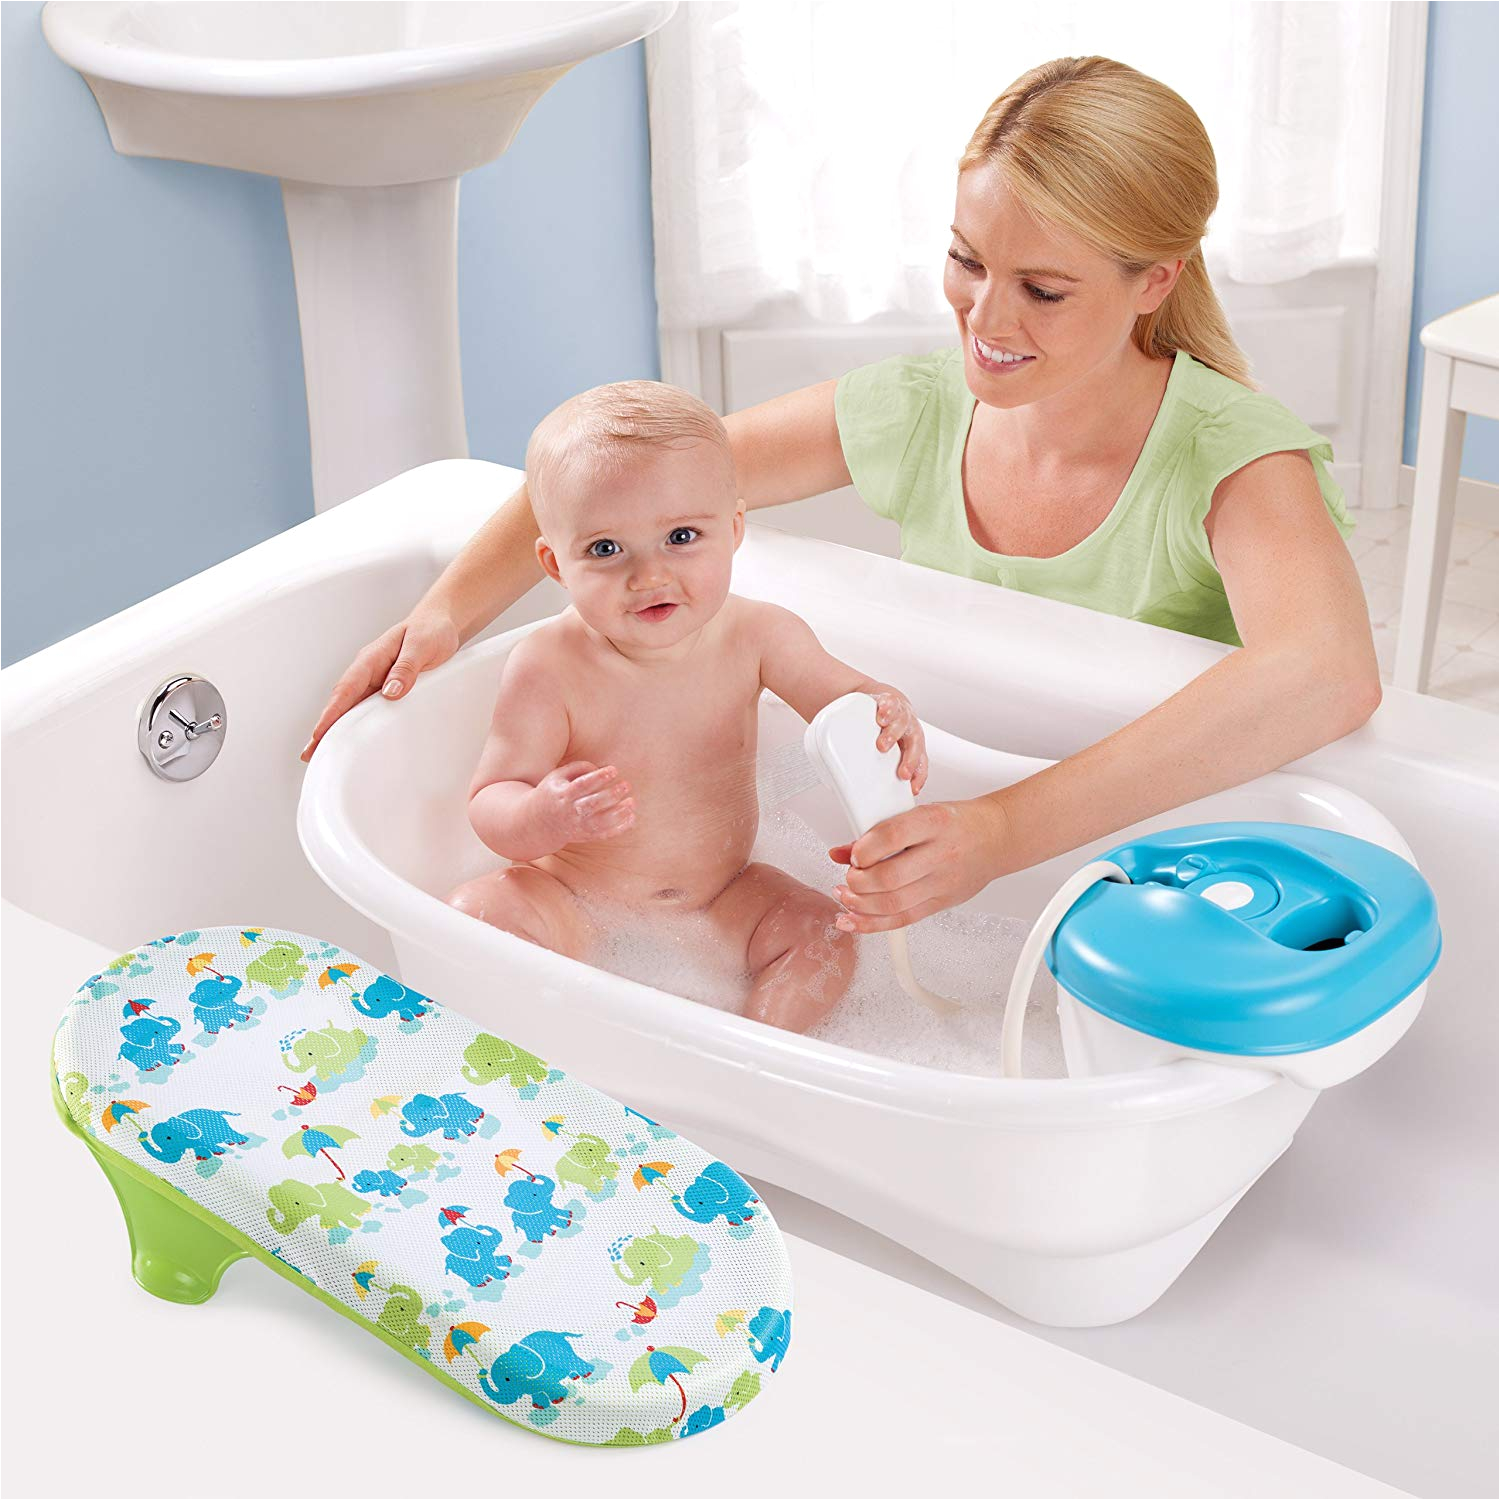 Non Plastic Baby Bathtub New Convenient Newborn to toddler Bath and Shower Tub